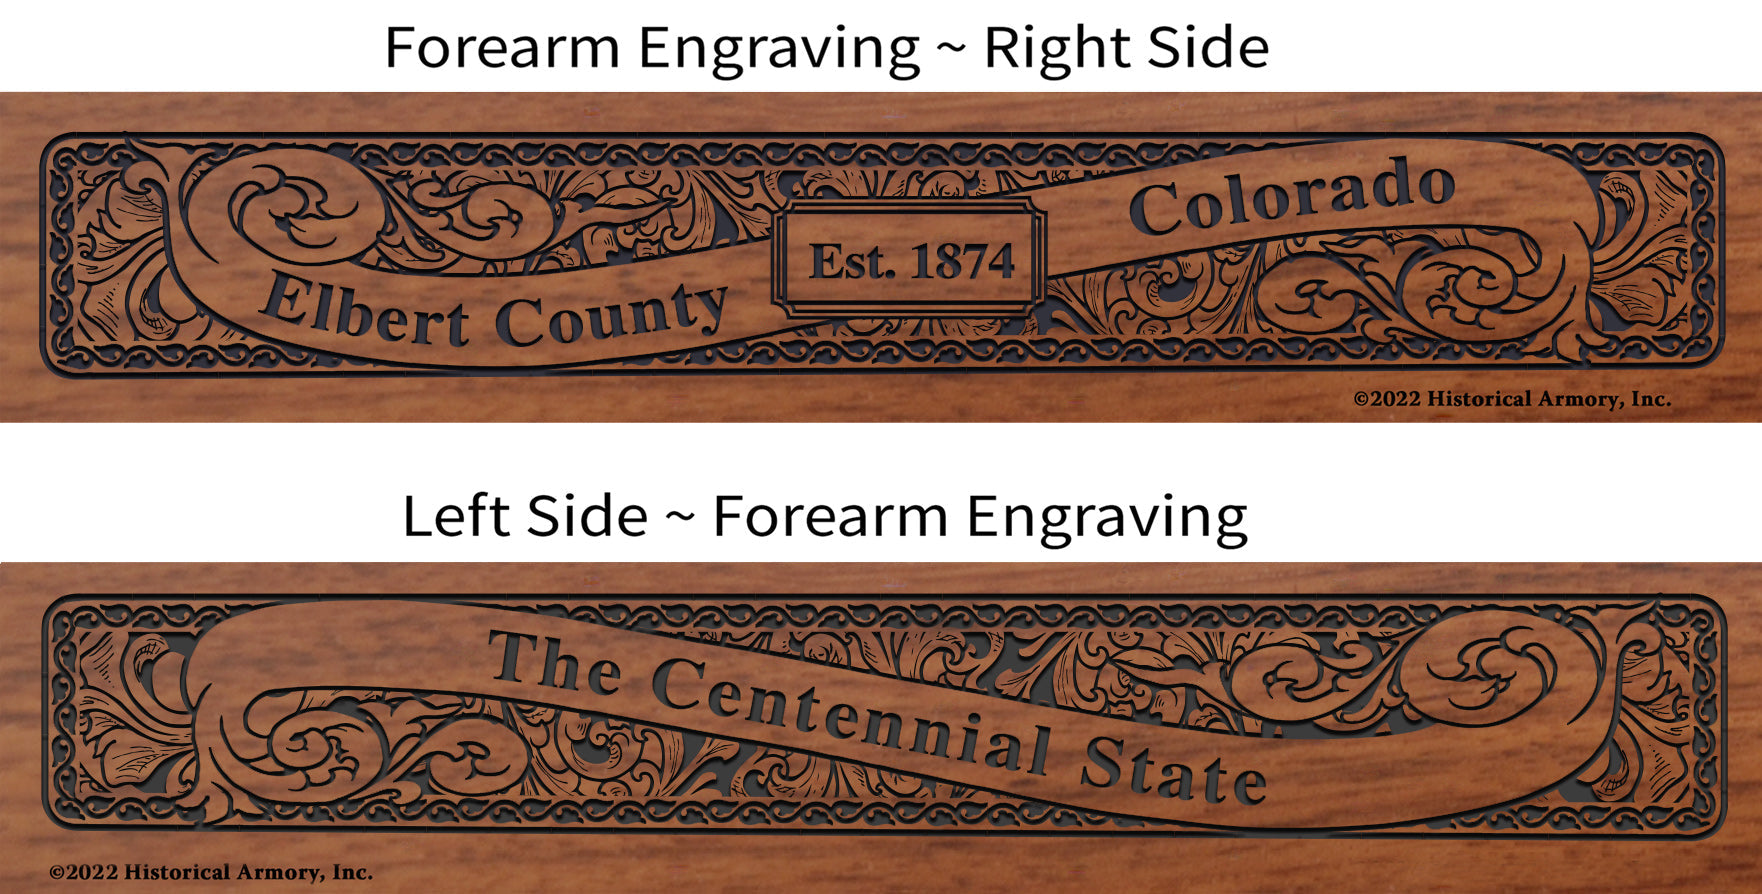 Elbert County Colorado Engraved Rifle Forearm